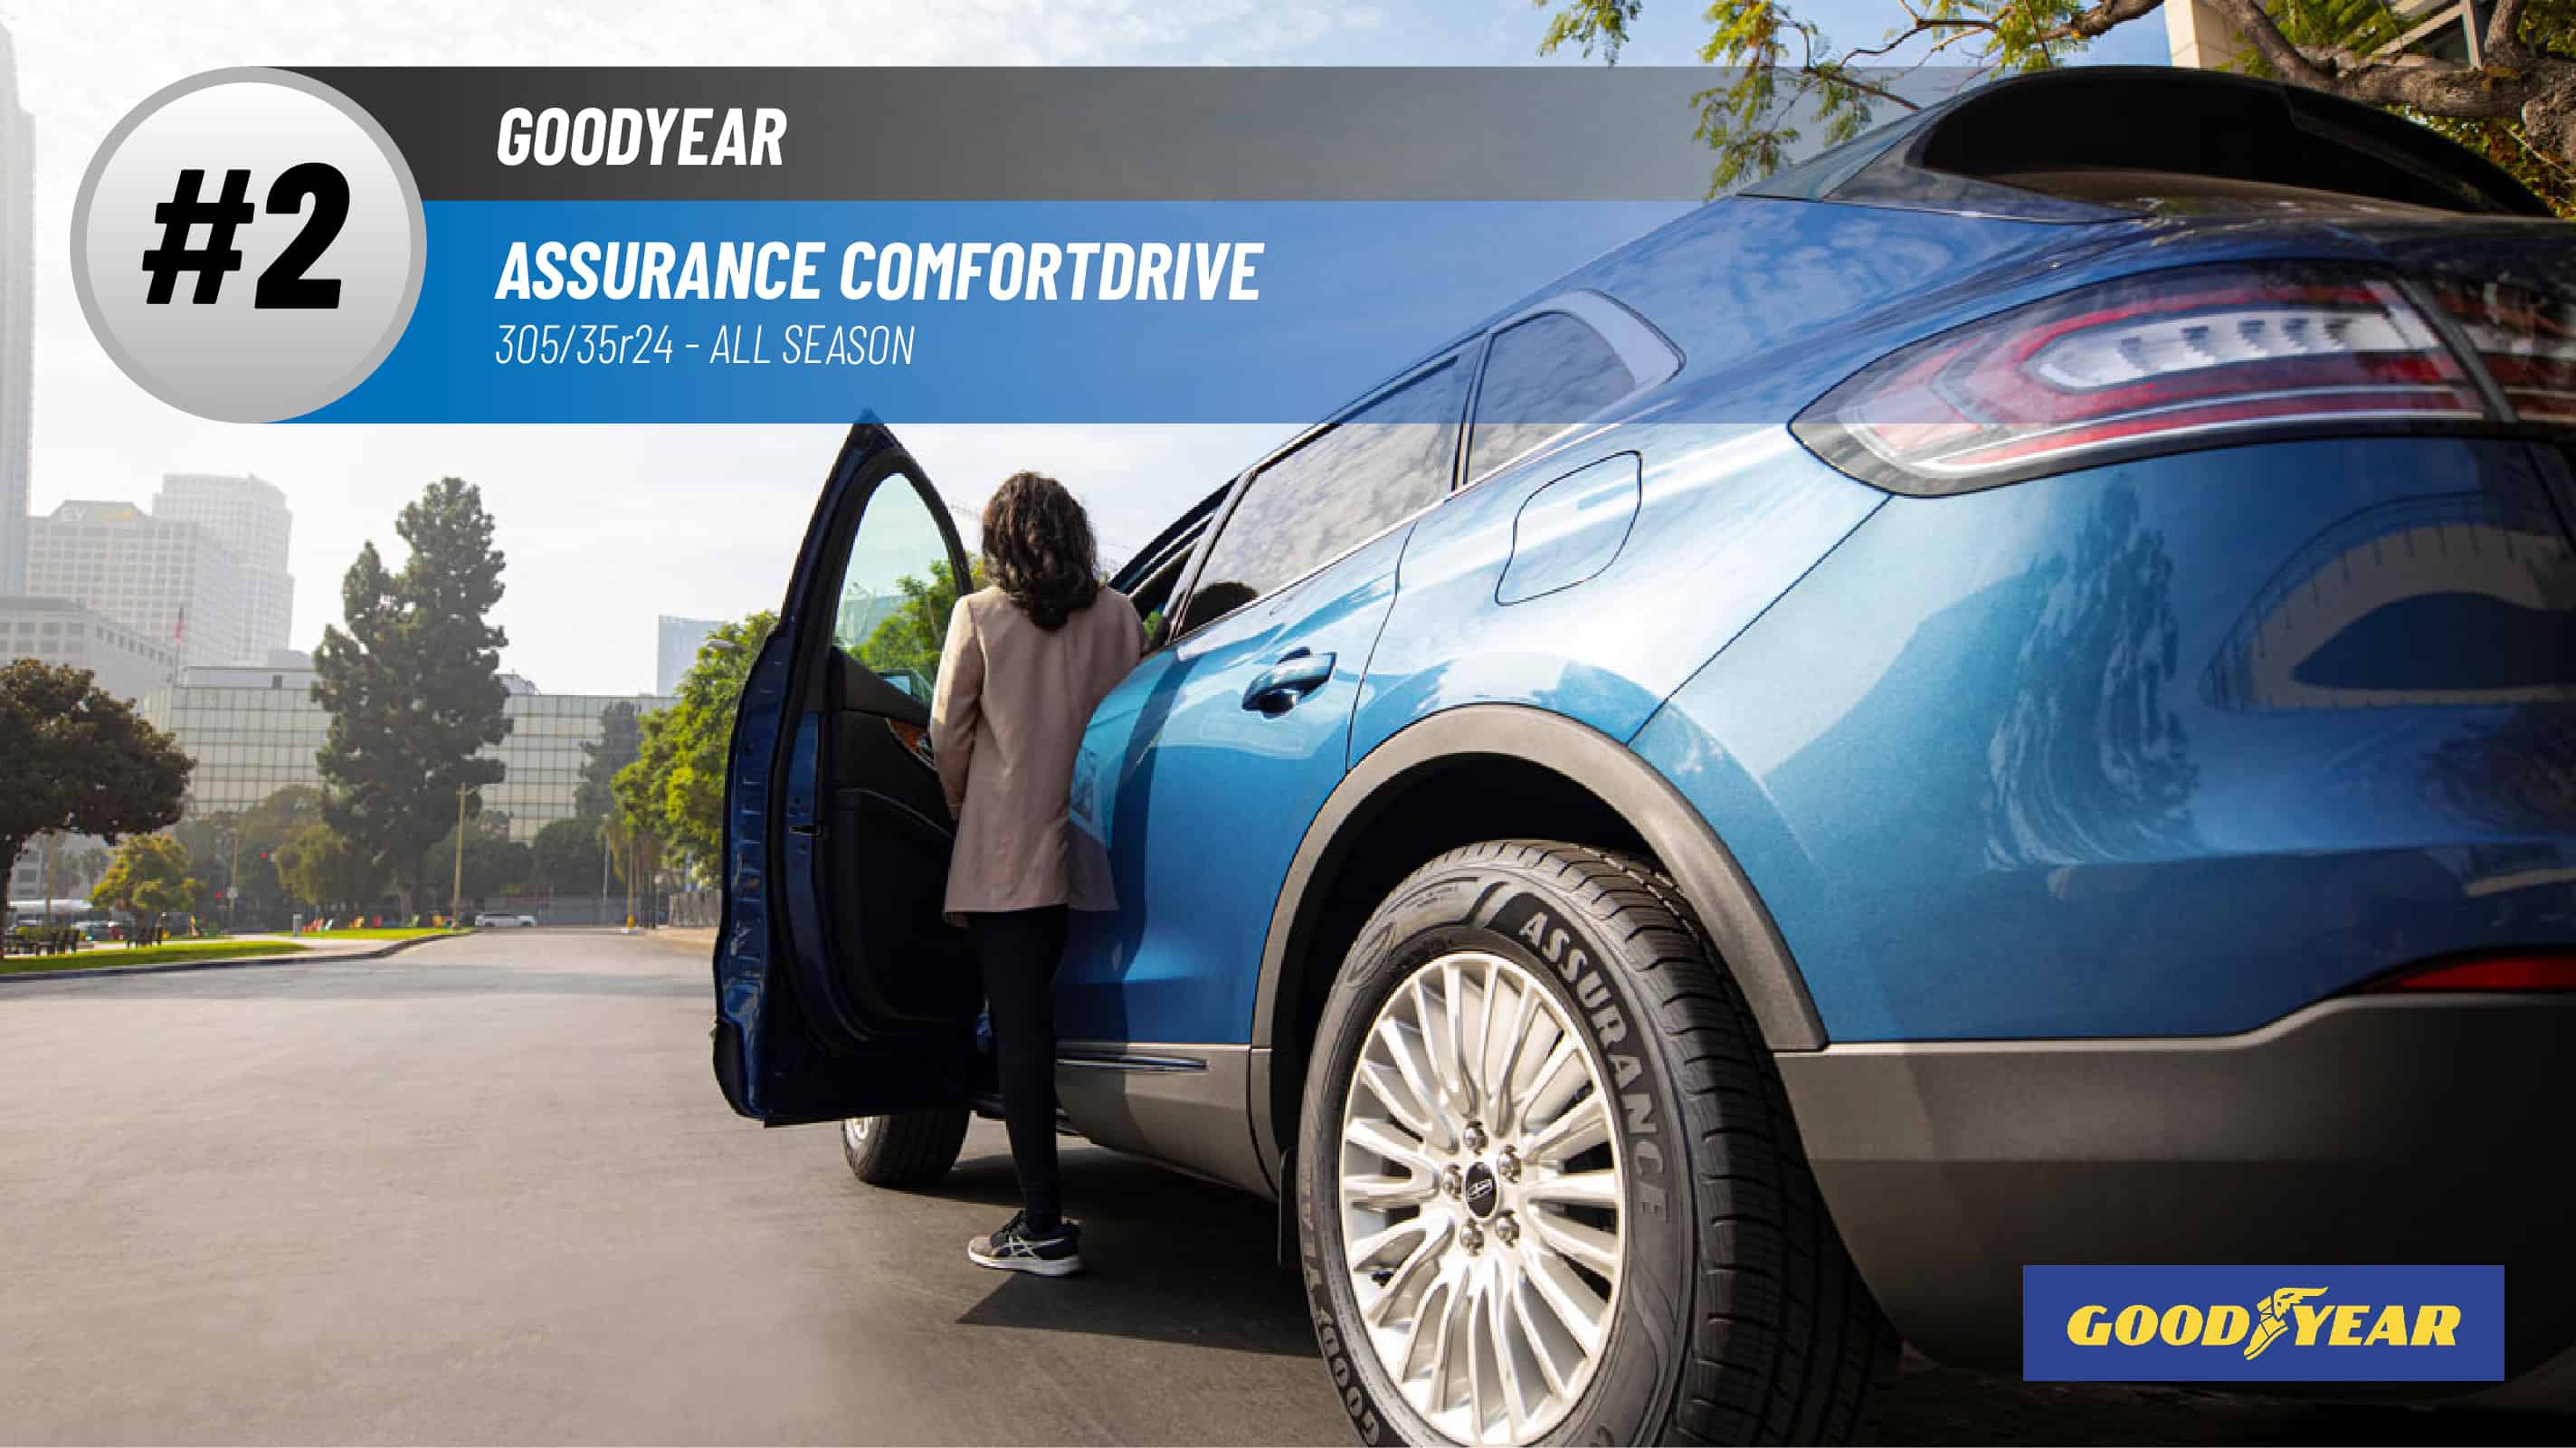 Top #2 All Season Tires: Goodyear Assurance Comfortdrive – 305/35R24